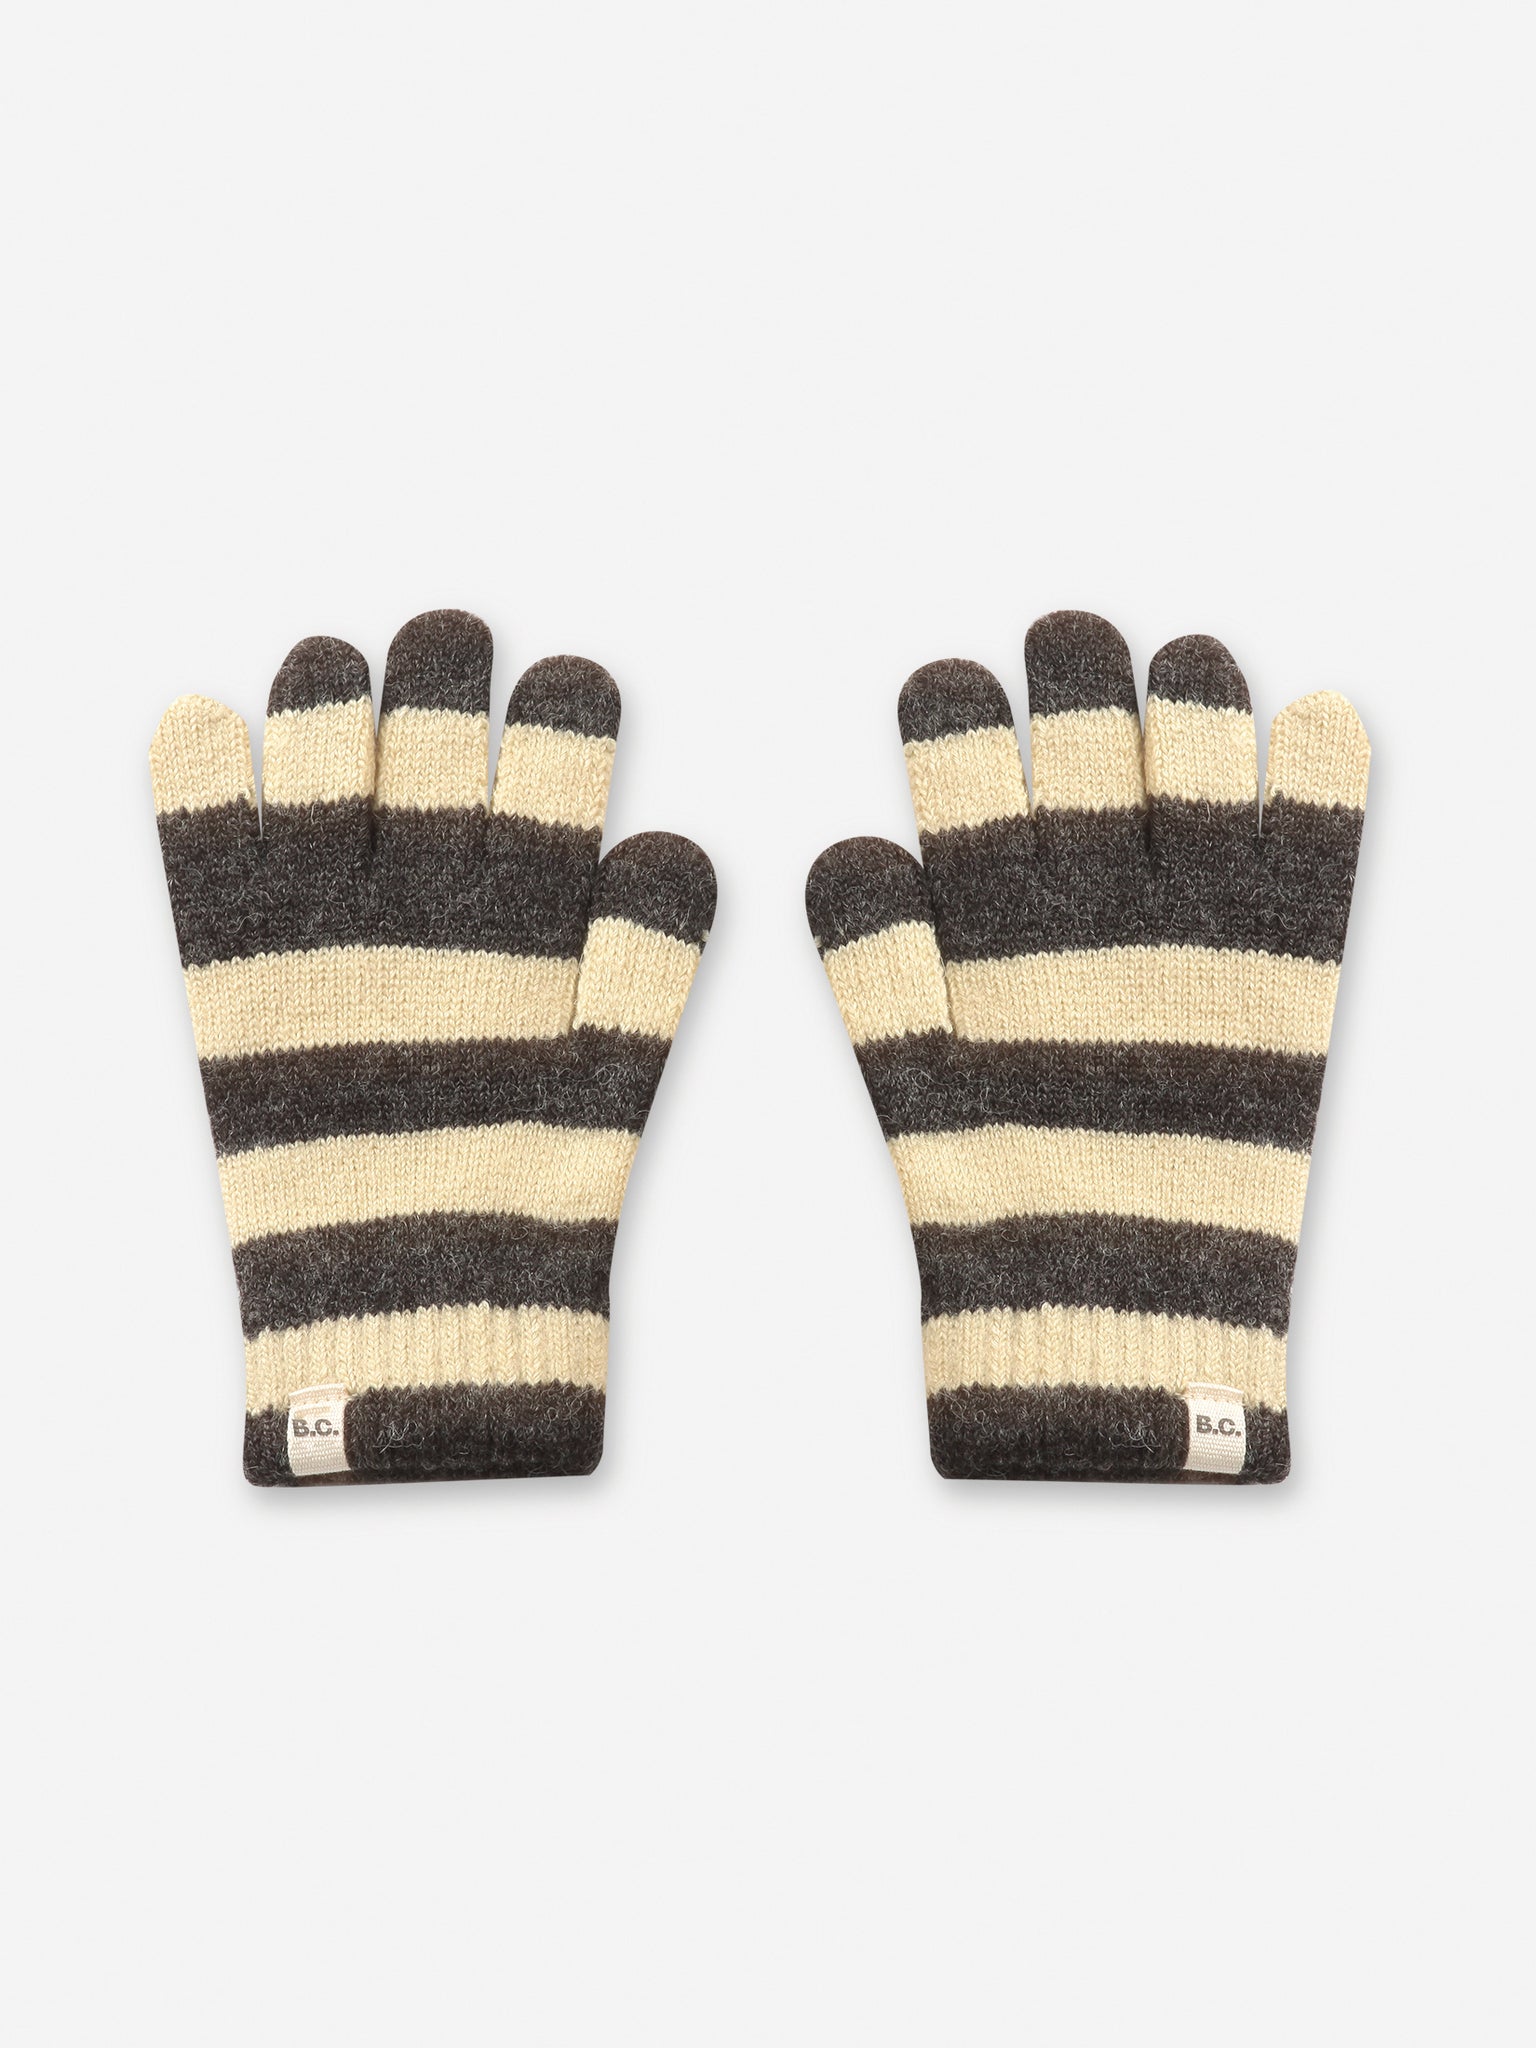 Stripped knitted gloves, December Sky